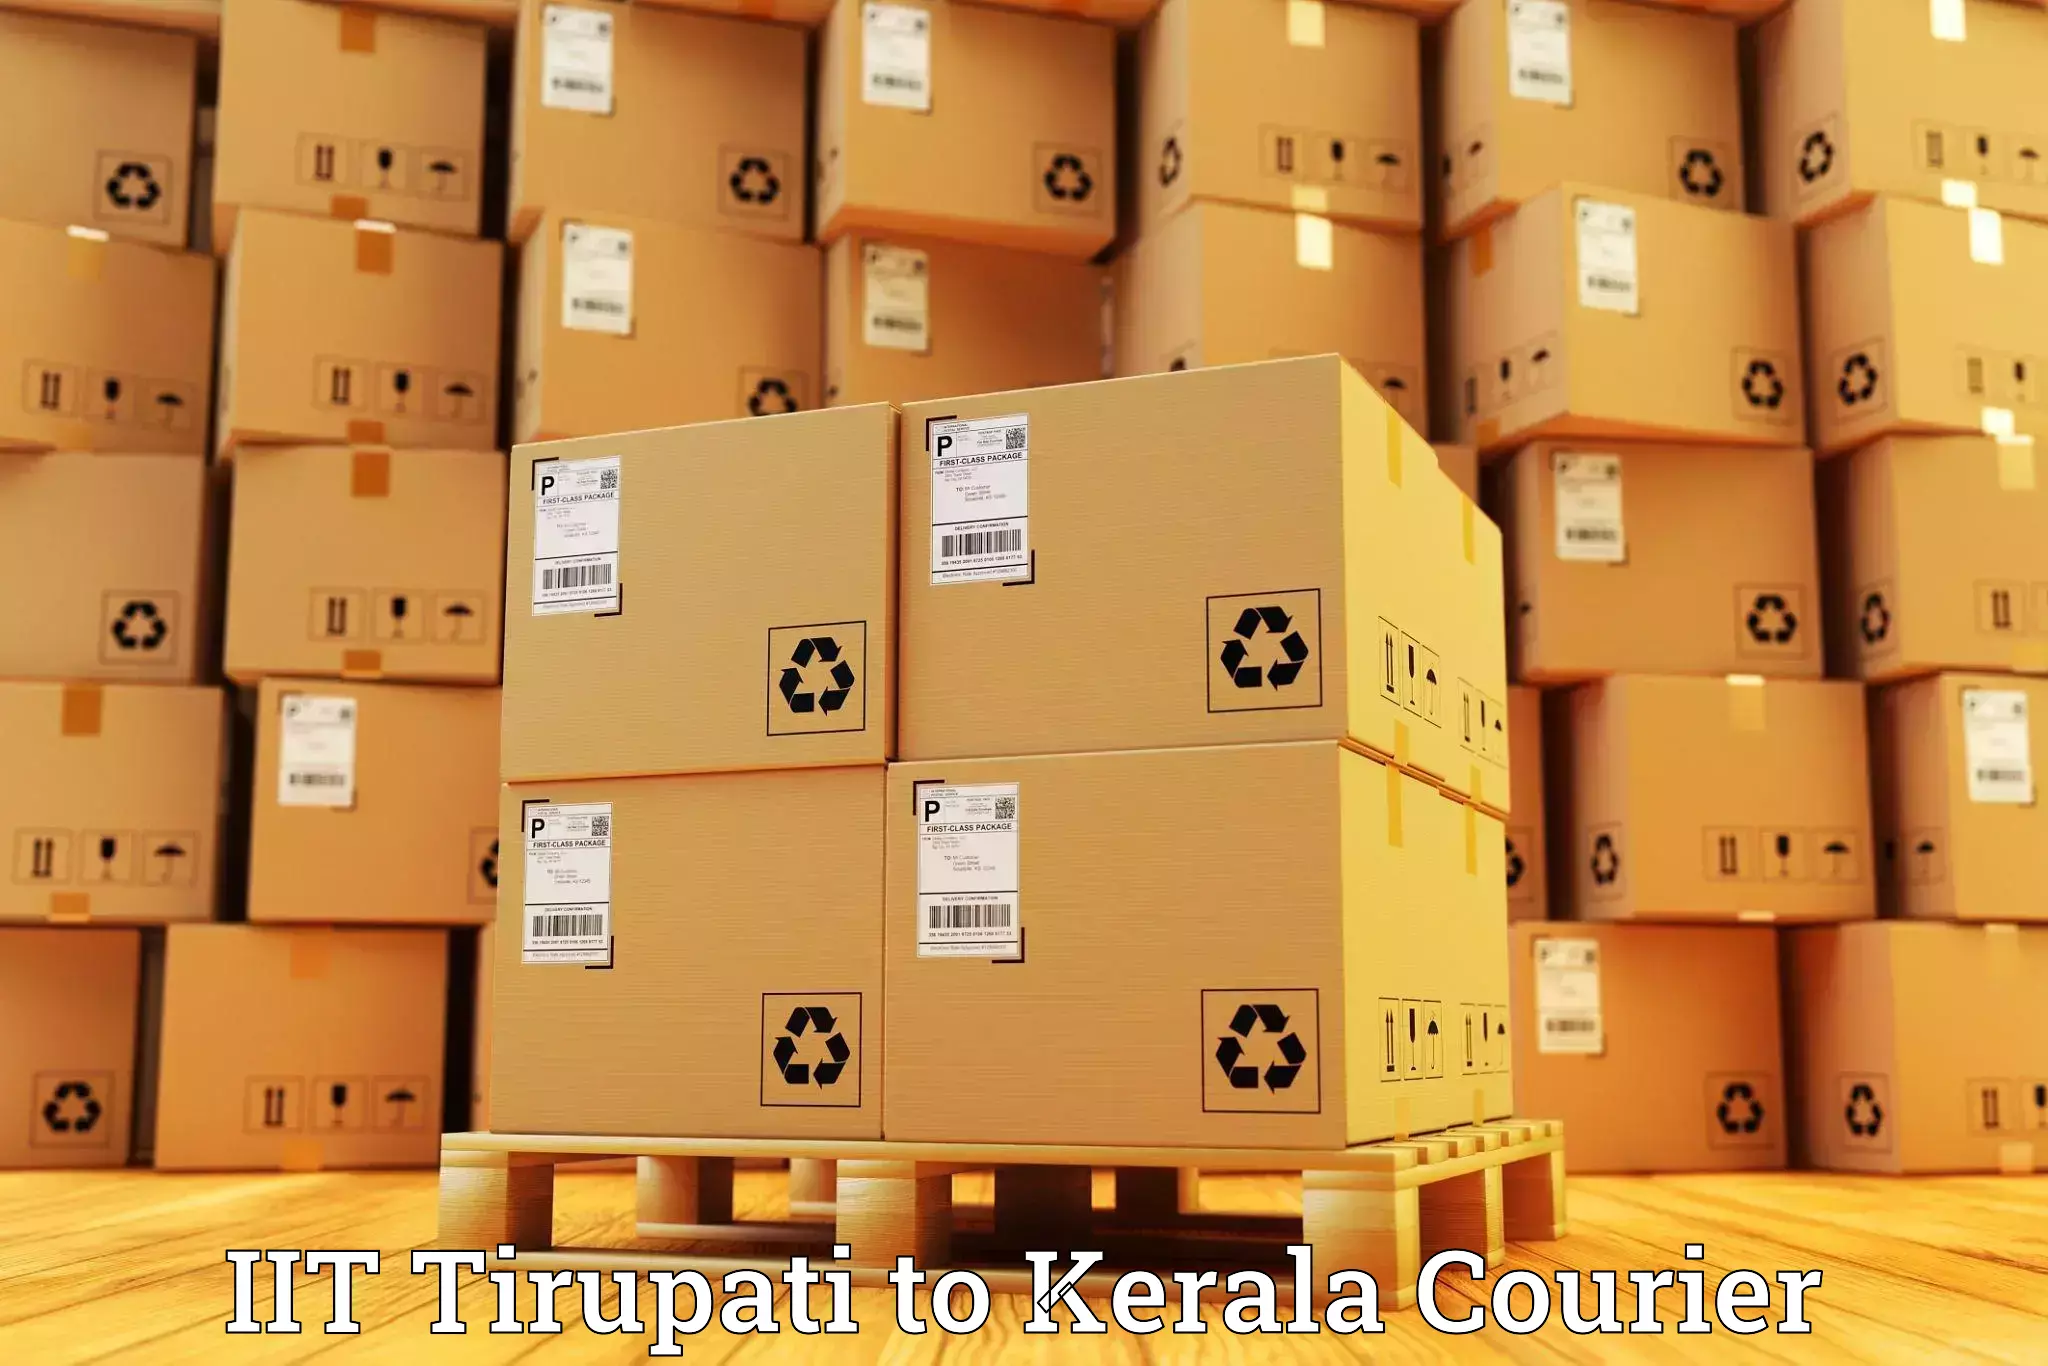 Express mail solutions IIT Tirupati to Kuchi